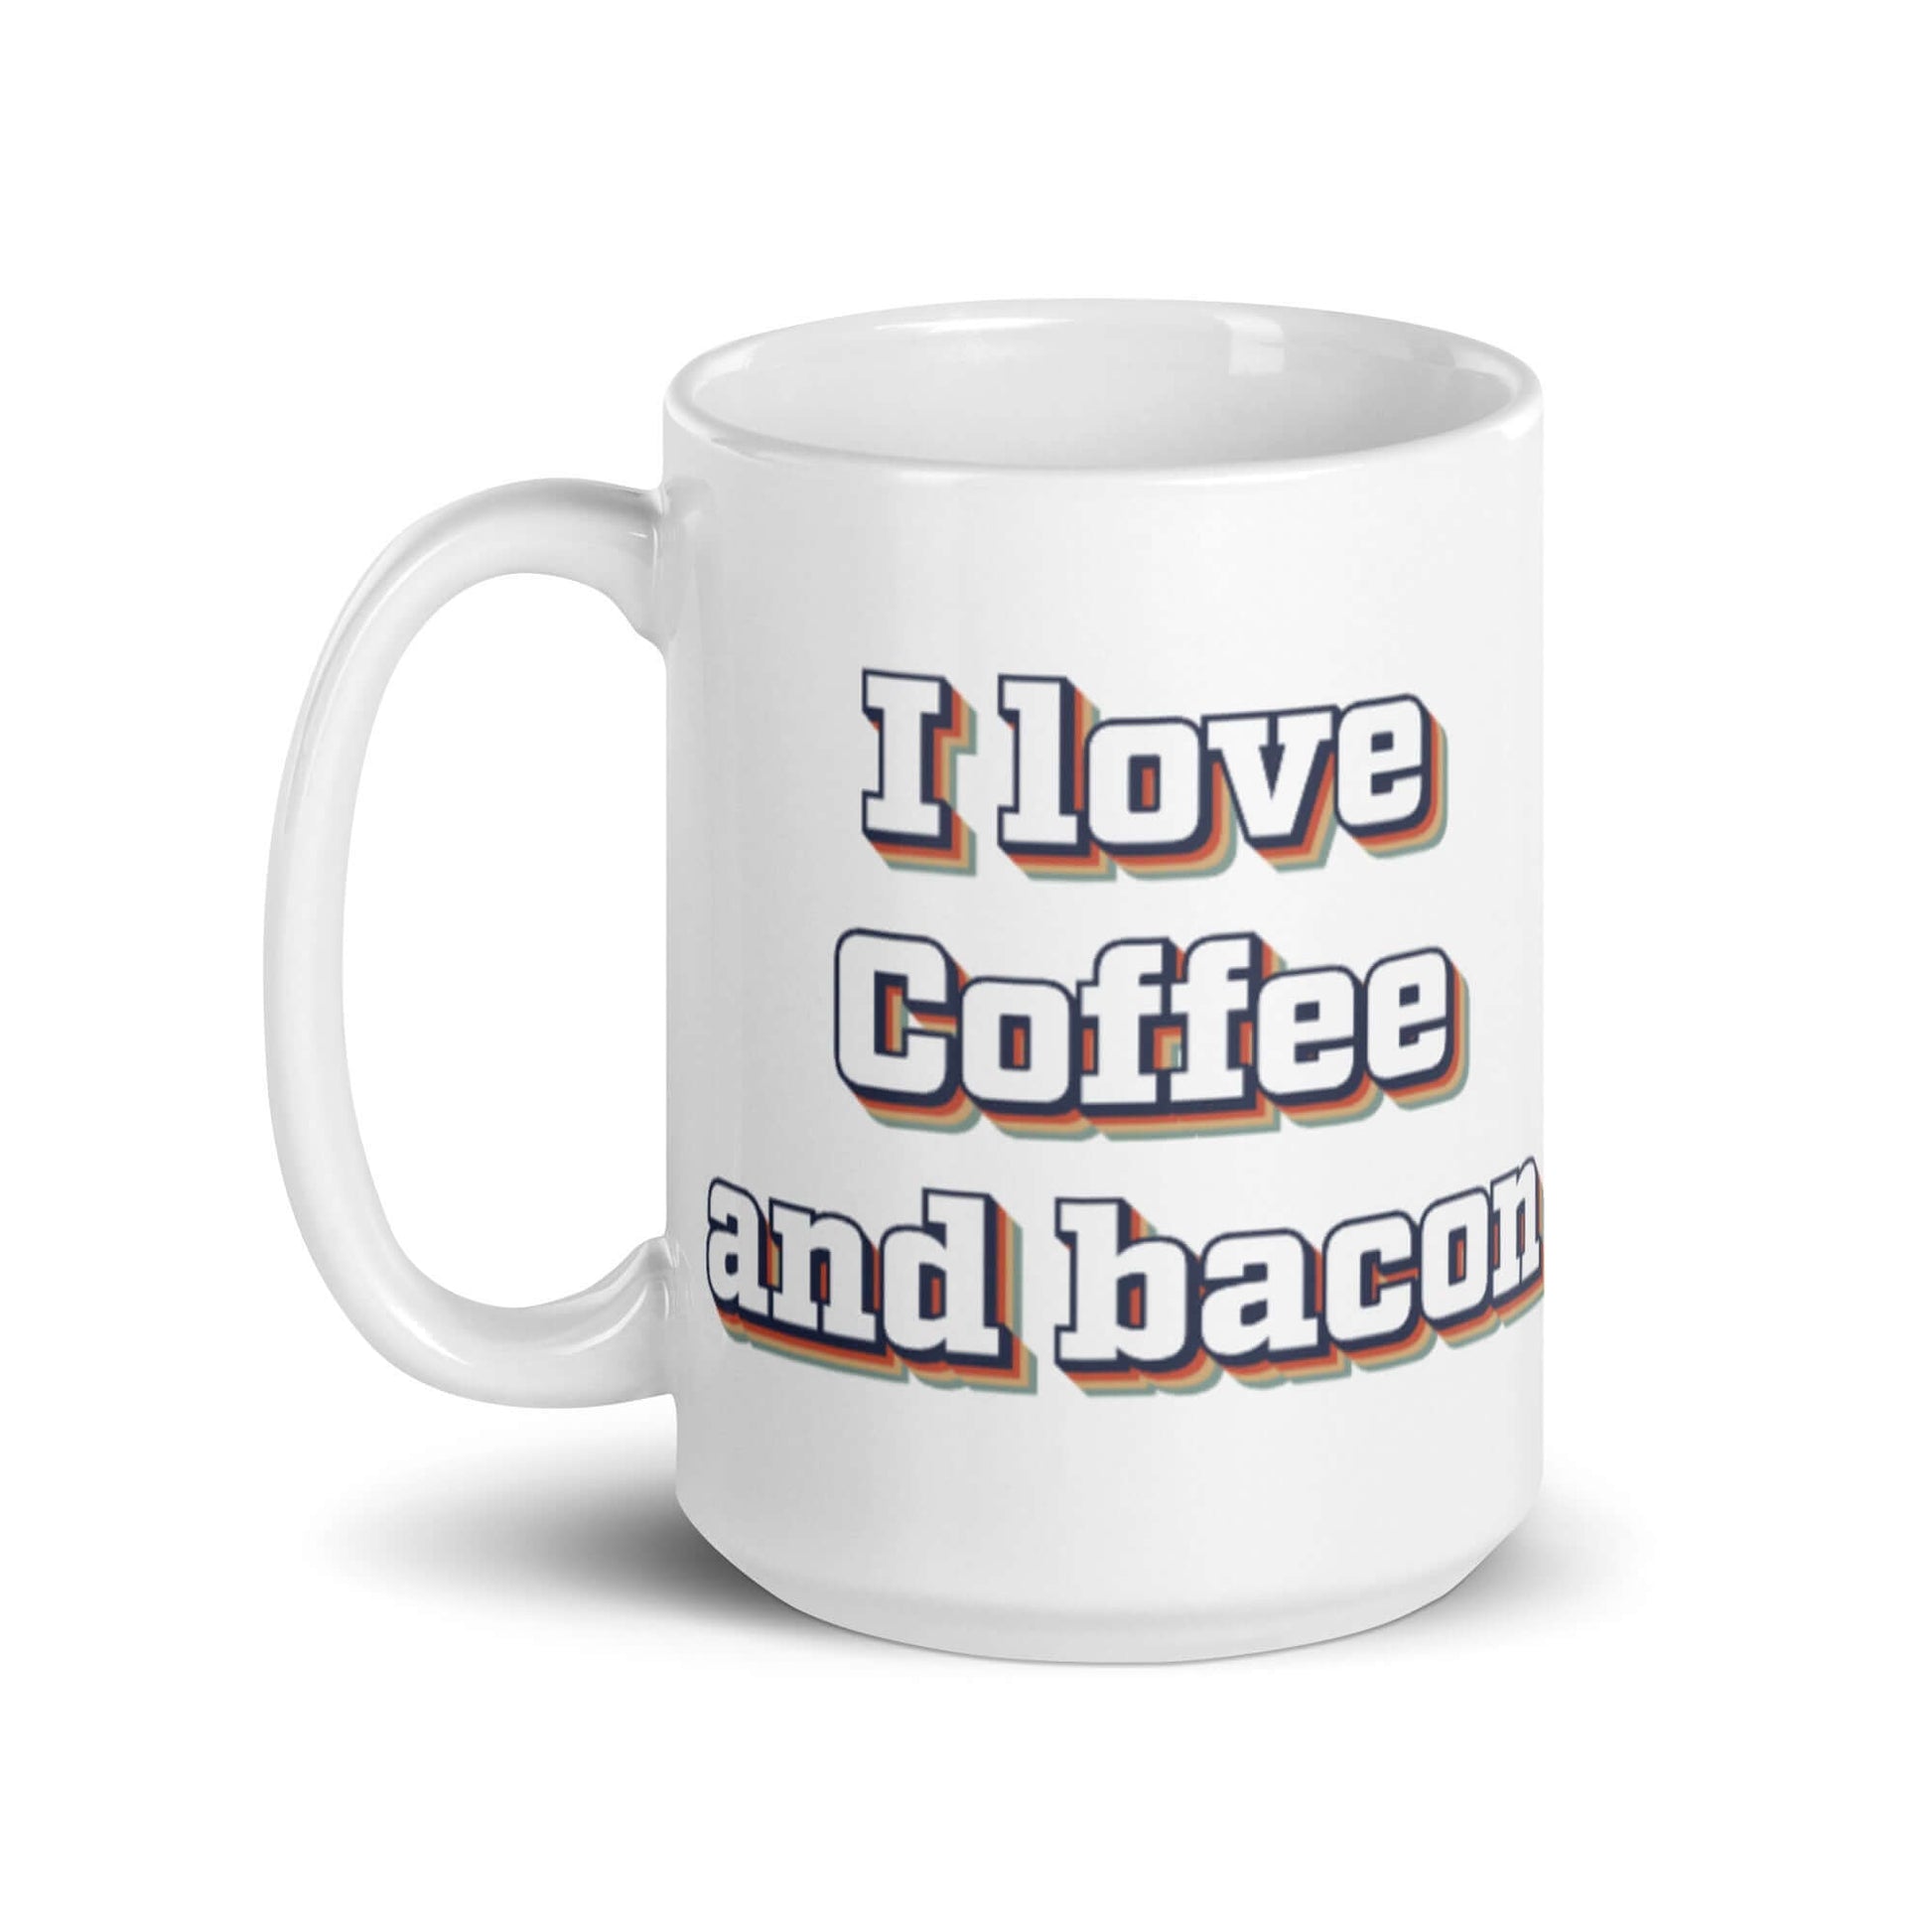 I love coffee and bacon - White glossy mug - Horrible Designs